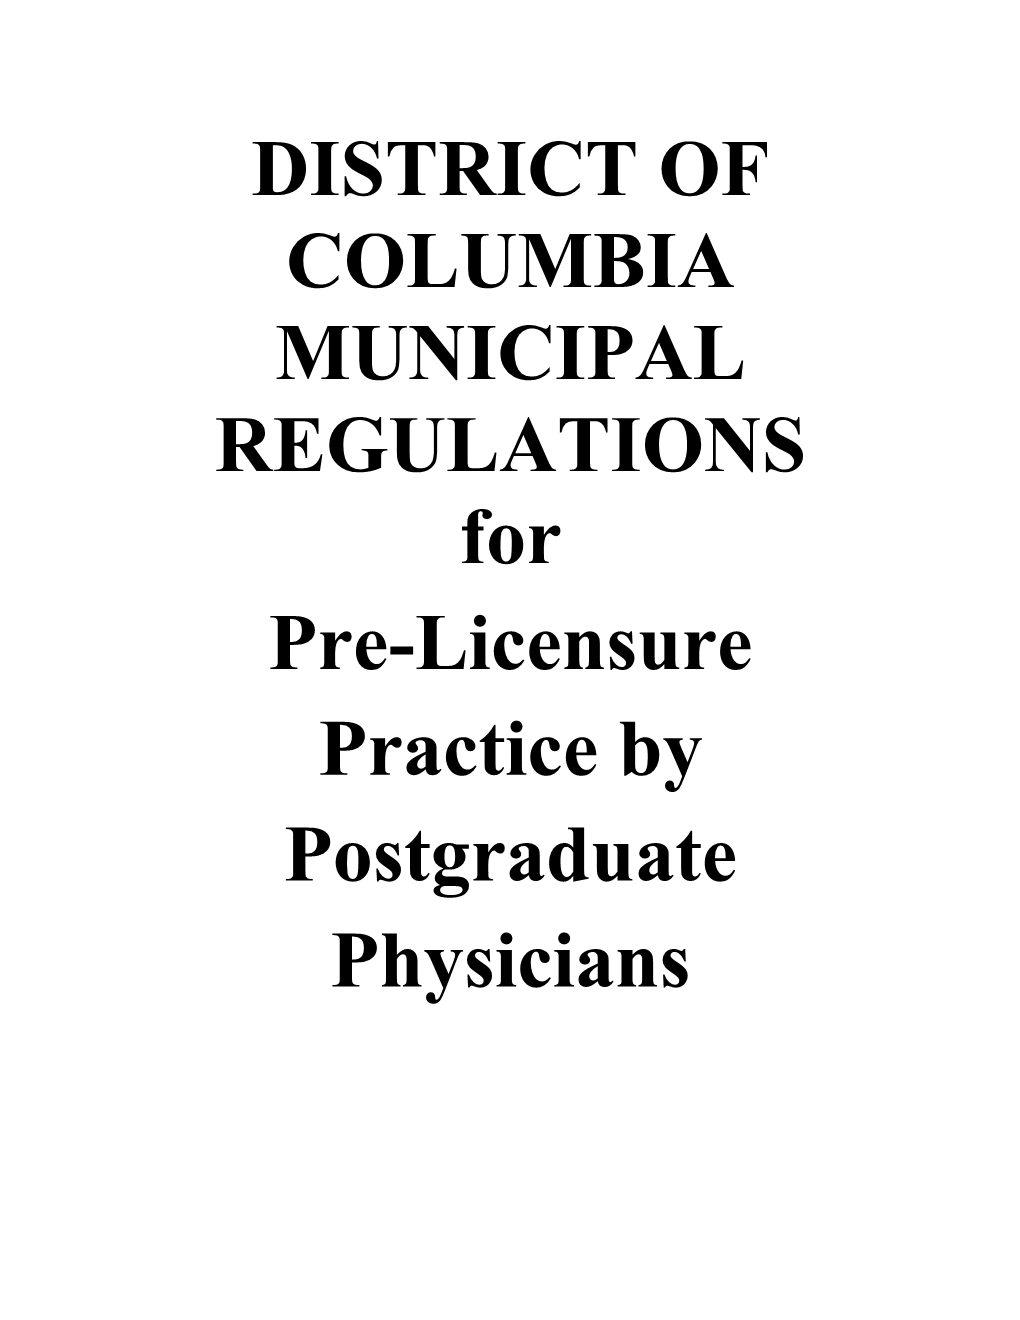 Medical Training License Regulation